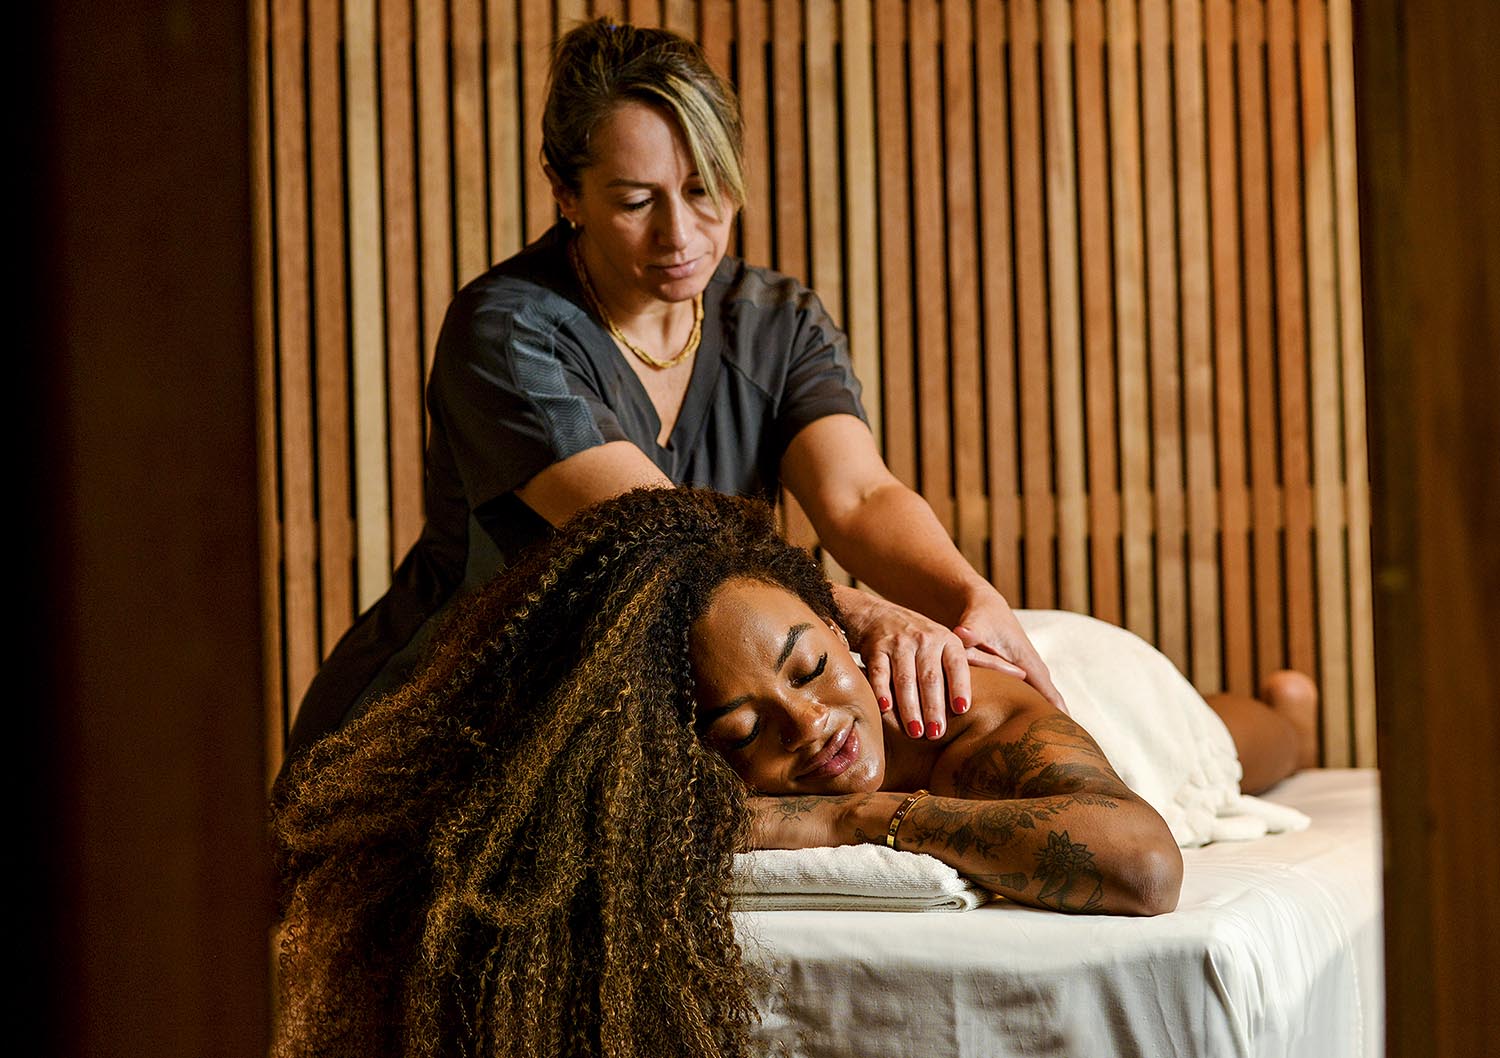 Patrícia recebe massagem exclusiva.